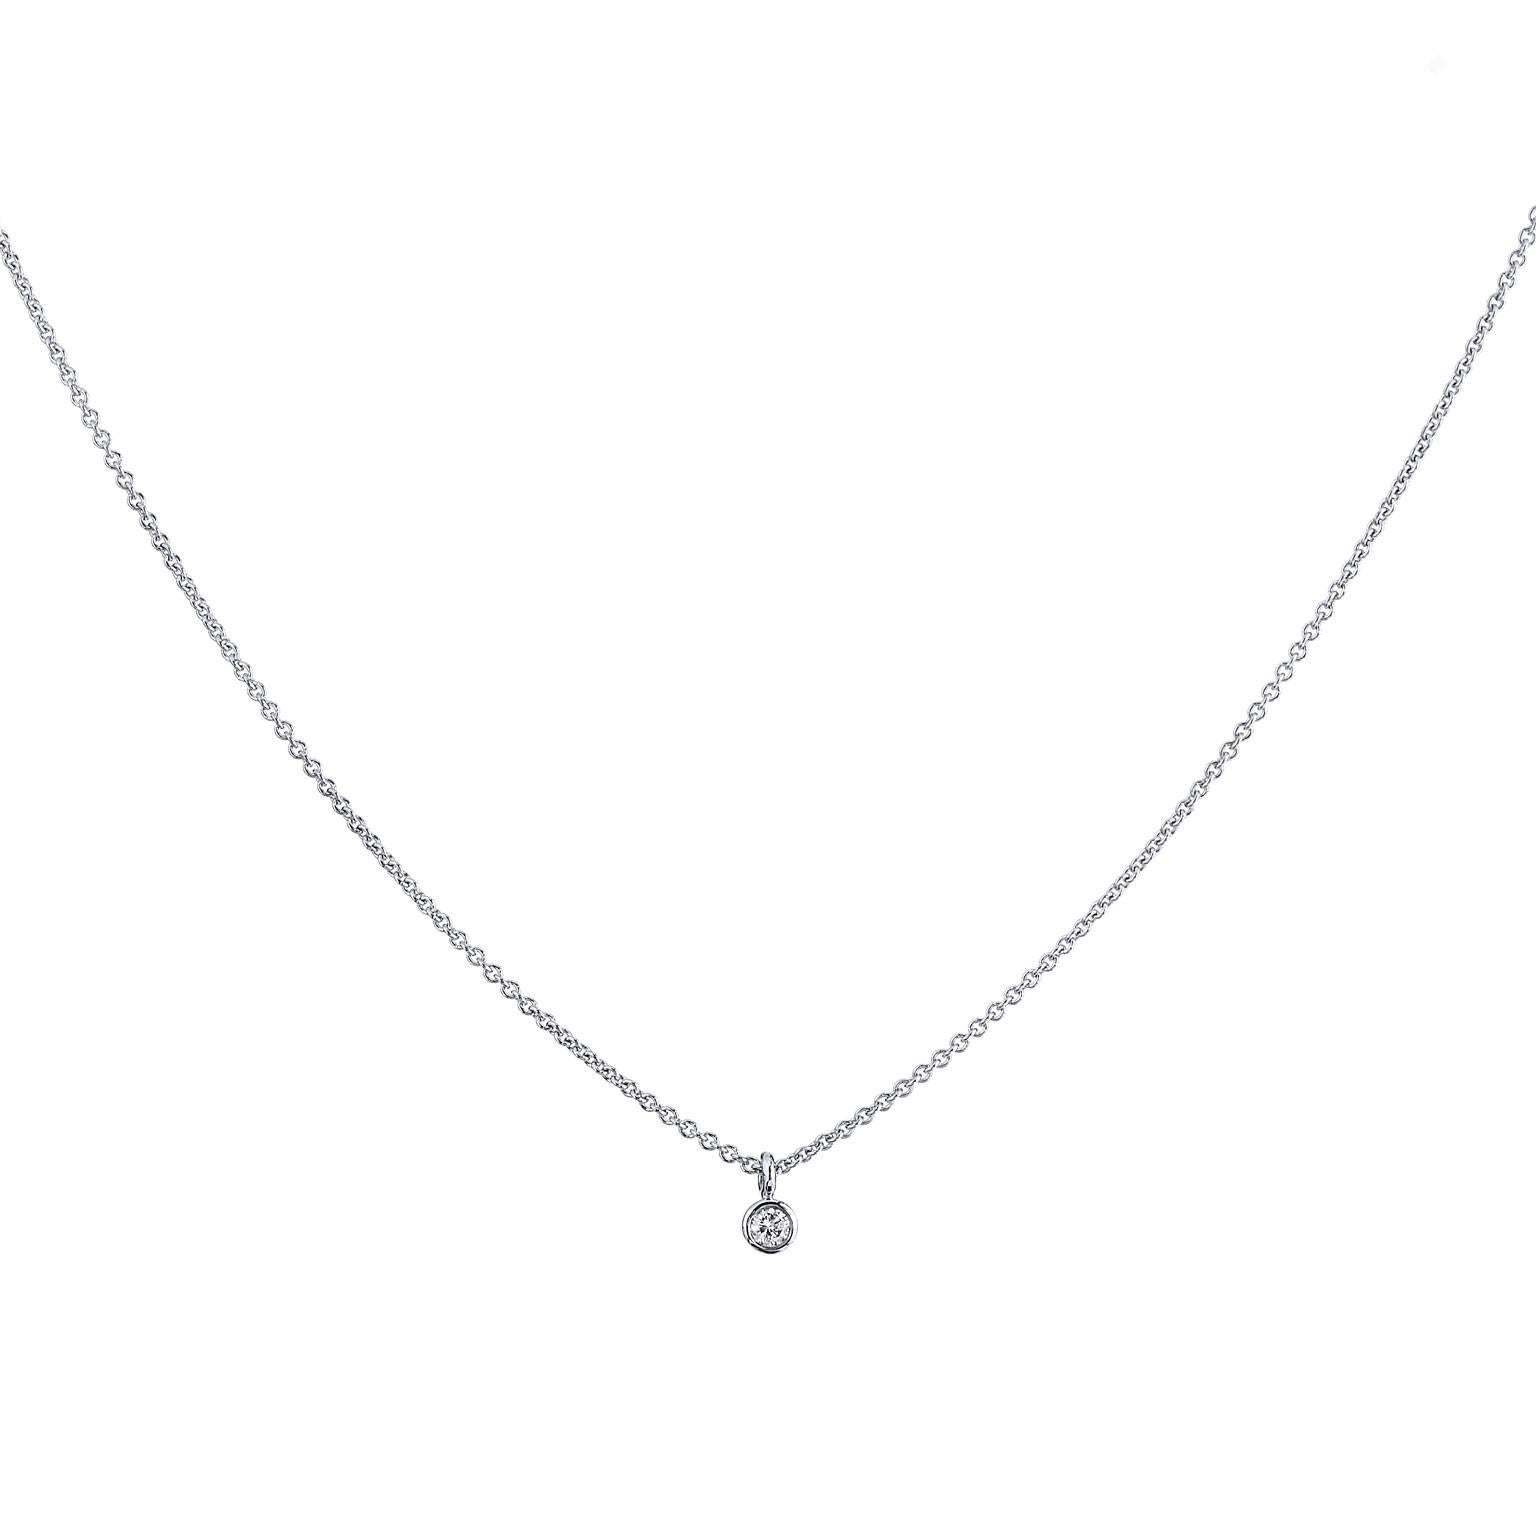 H & H Minimal 0.05 Carat Diamond Solitaire Pendant Necklace